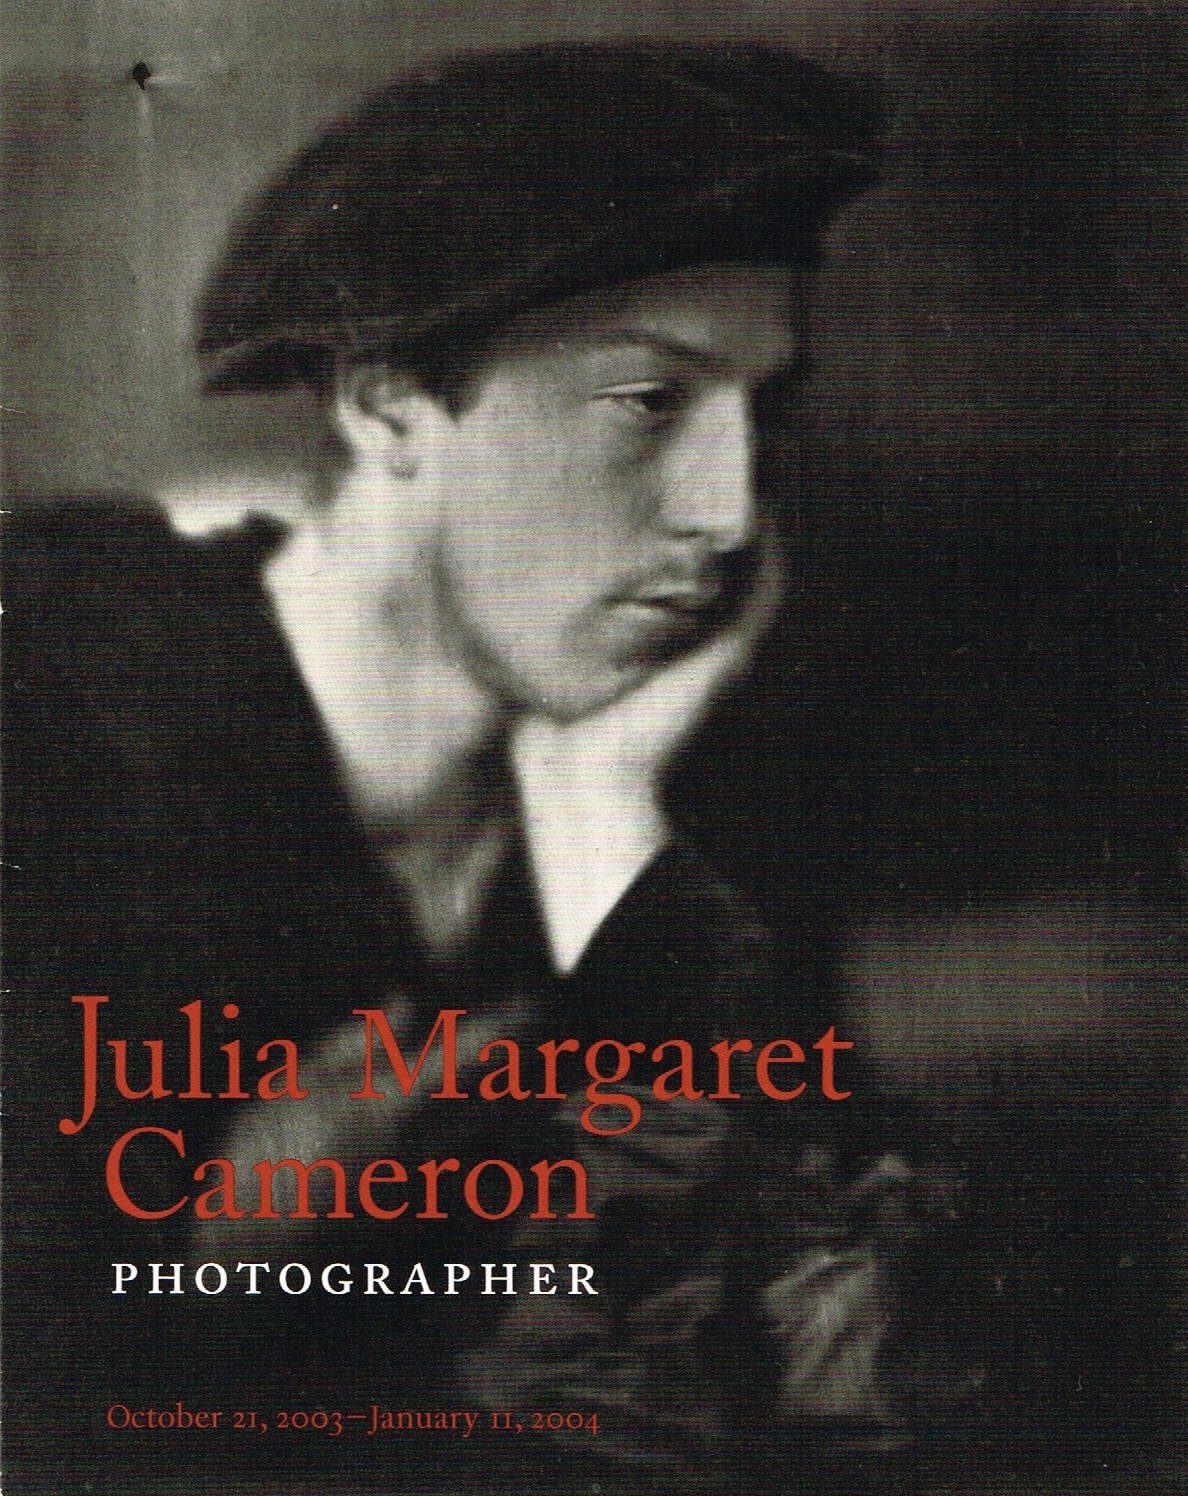 (CAMERON, JULIA MARGARET). Cox, Julian - JULIA MARGARET CAMERON: PHOTOGRAPHER